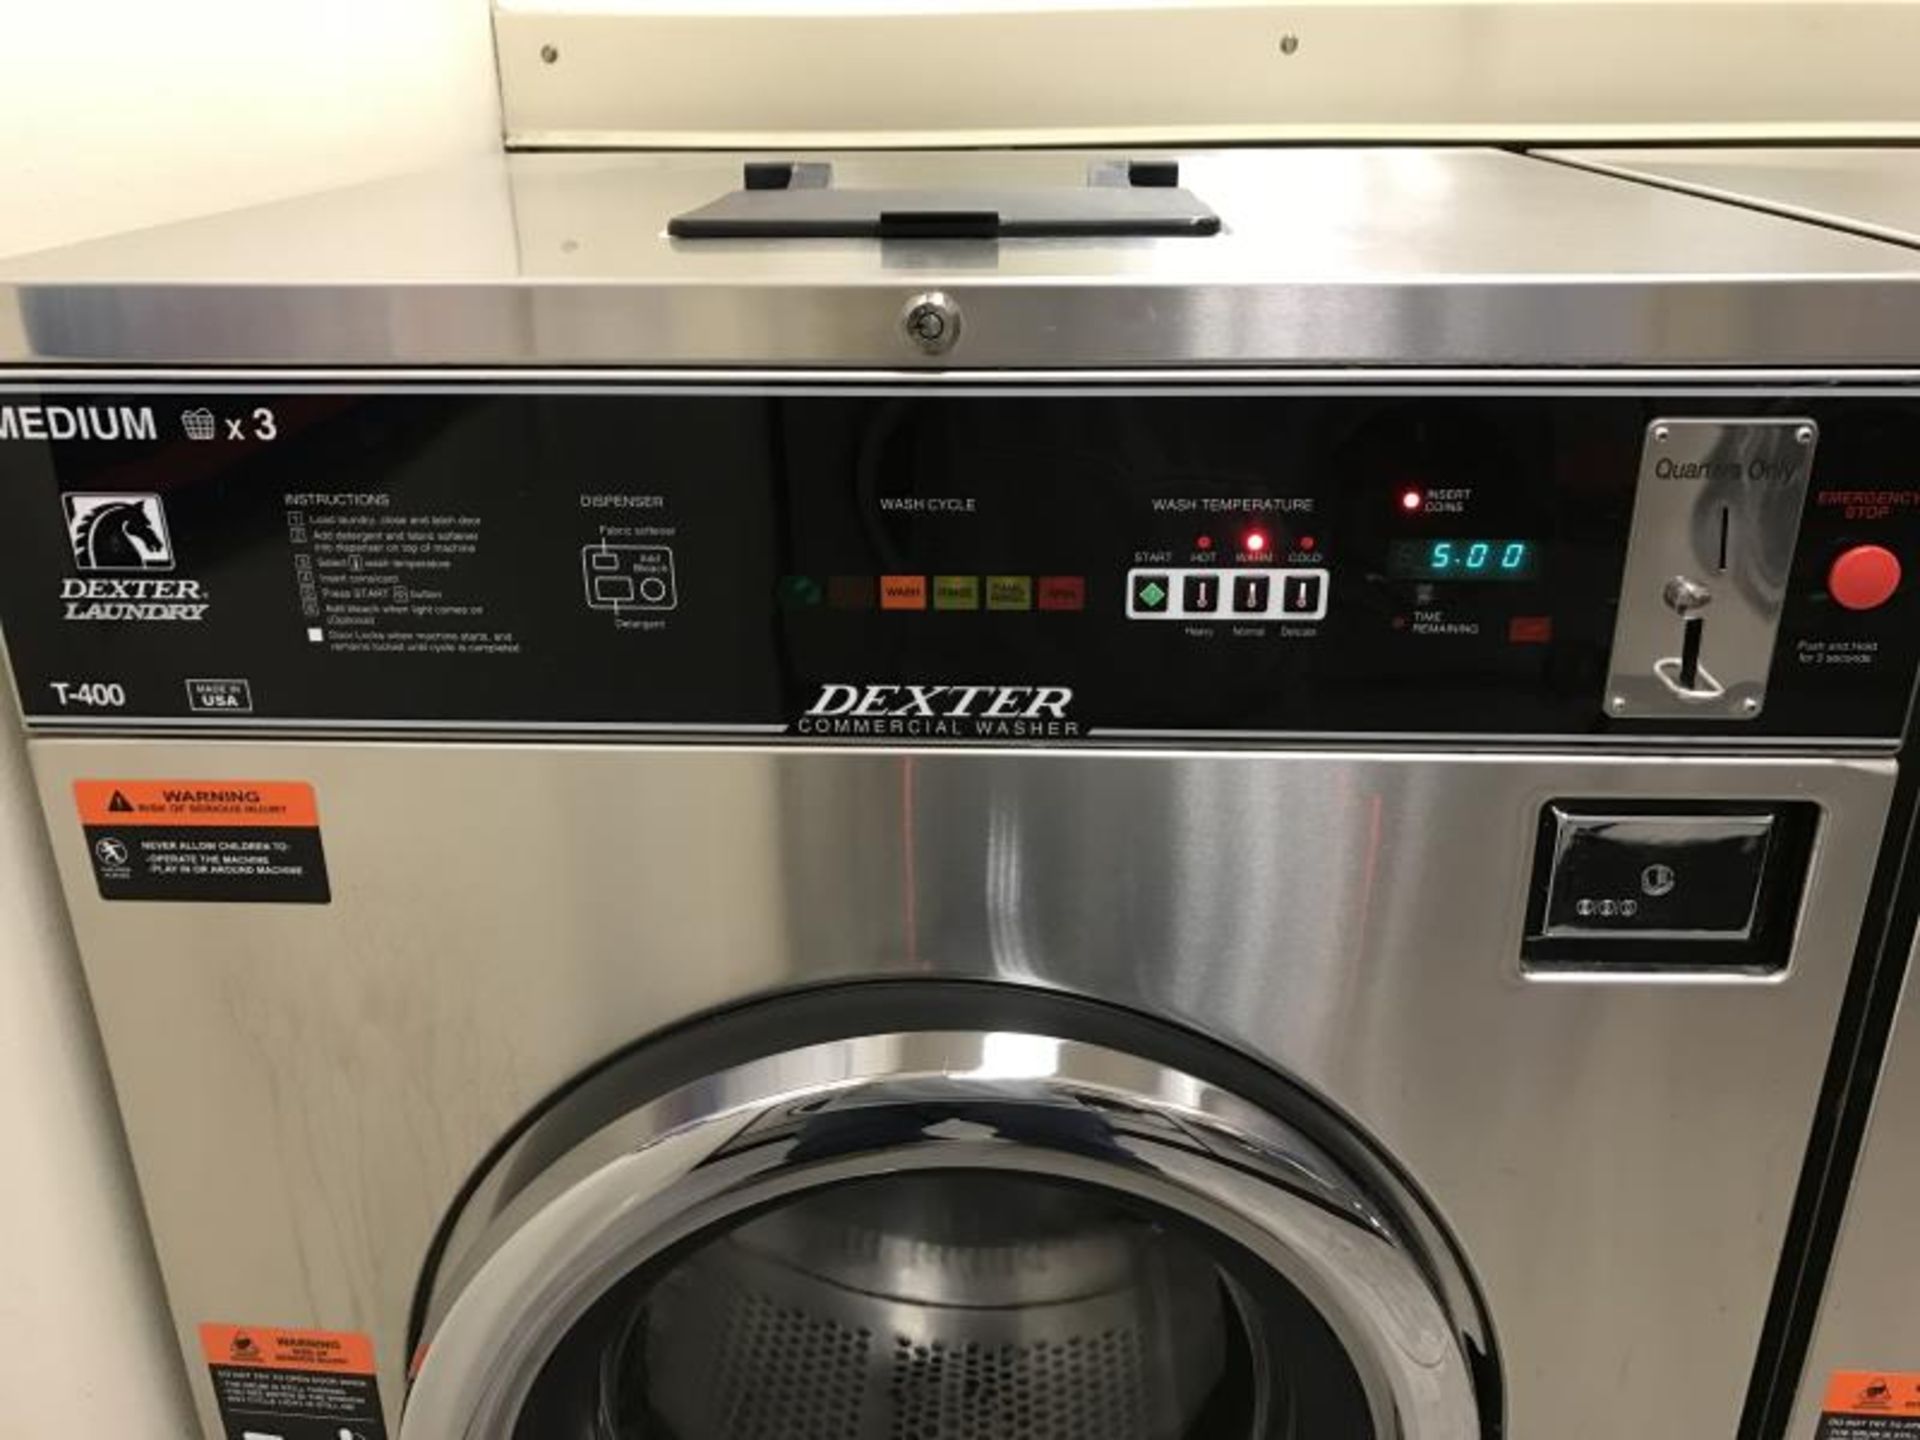 Dexter Commercial Washing Machine, Medium x 3, 30 Lbs., Model: T-400 / WCAD30KCX-12CN, SN: 531759 - Image 2 of 2